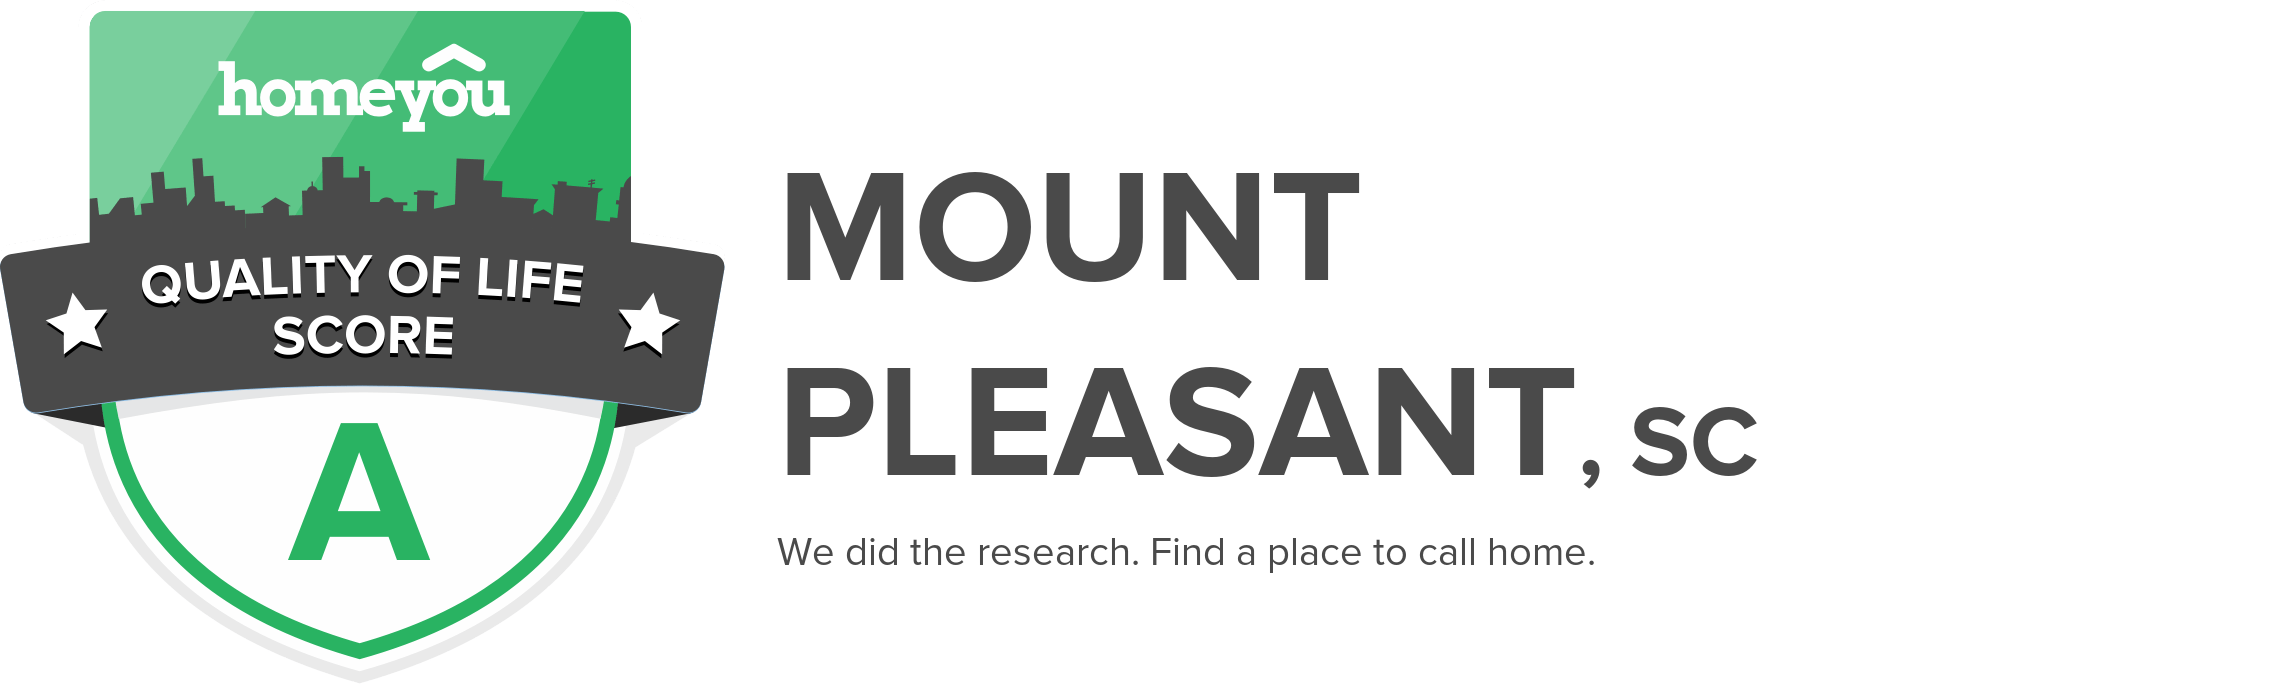 Mount Pleasant, SC